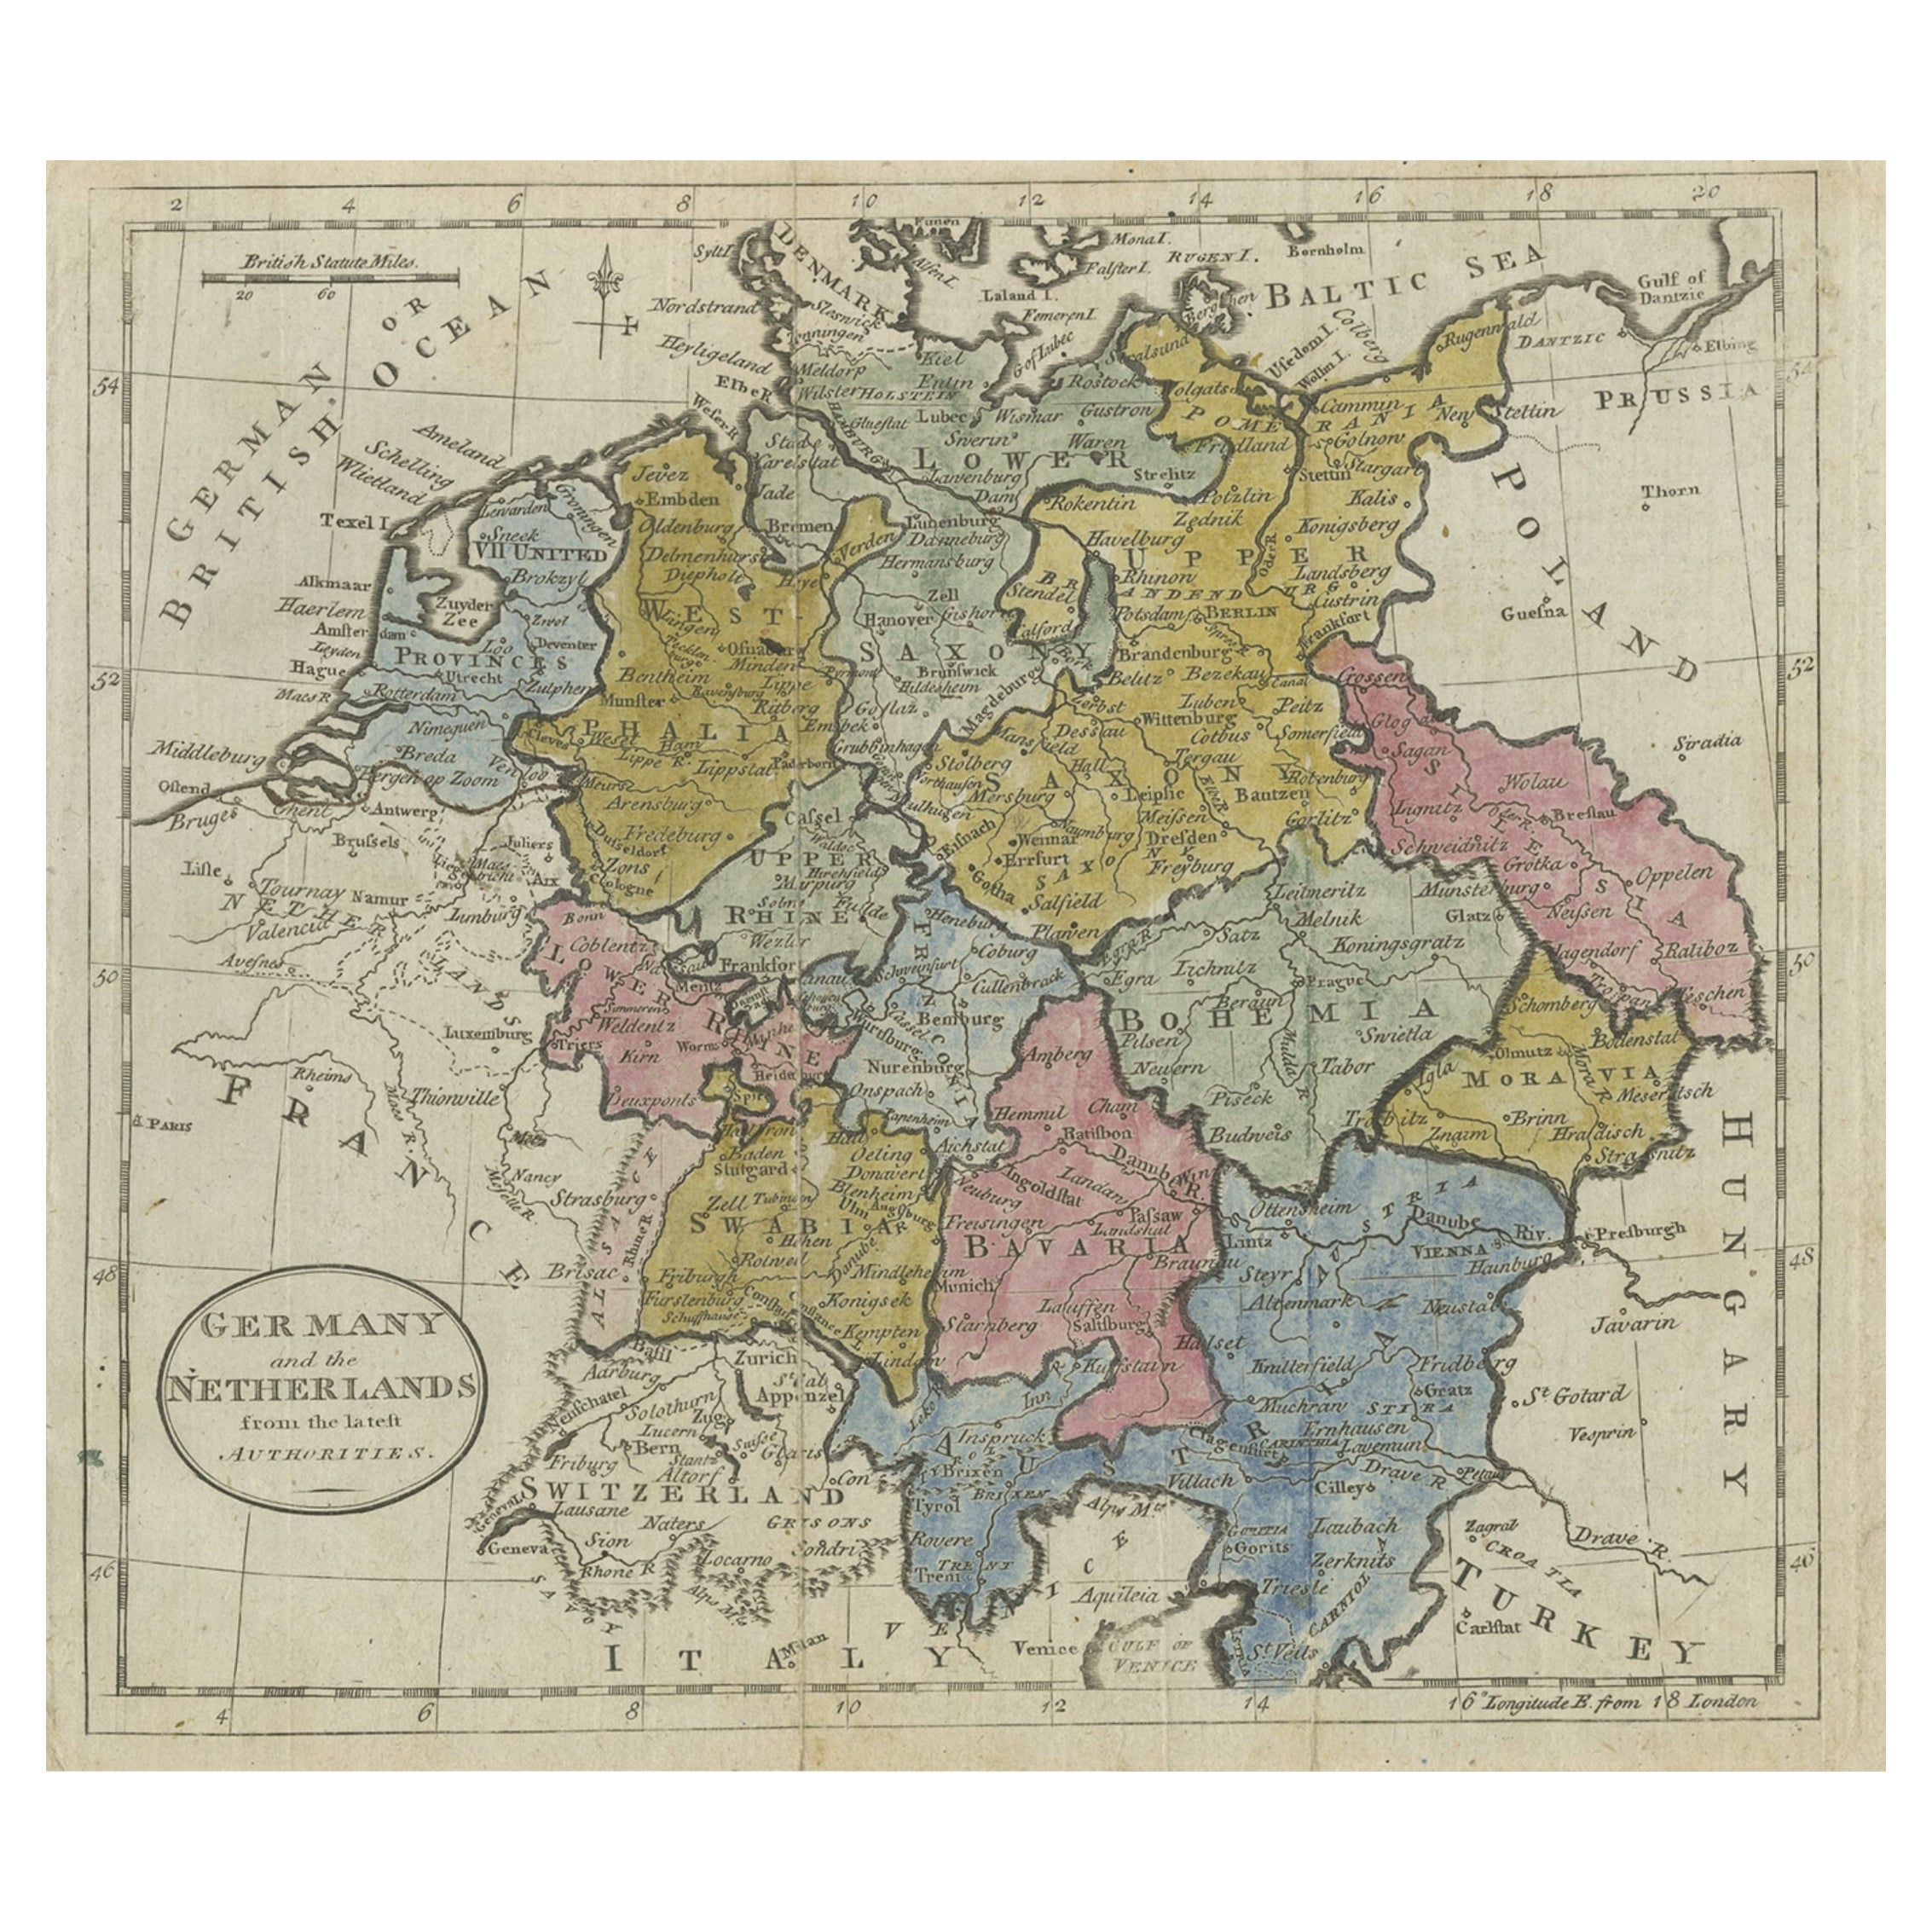 Antique Map of Germany, the Netherlands, Bohemia, Bavaria and Switzerland, 1785